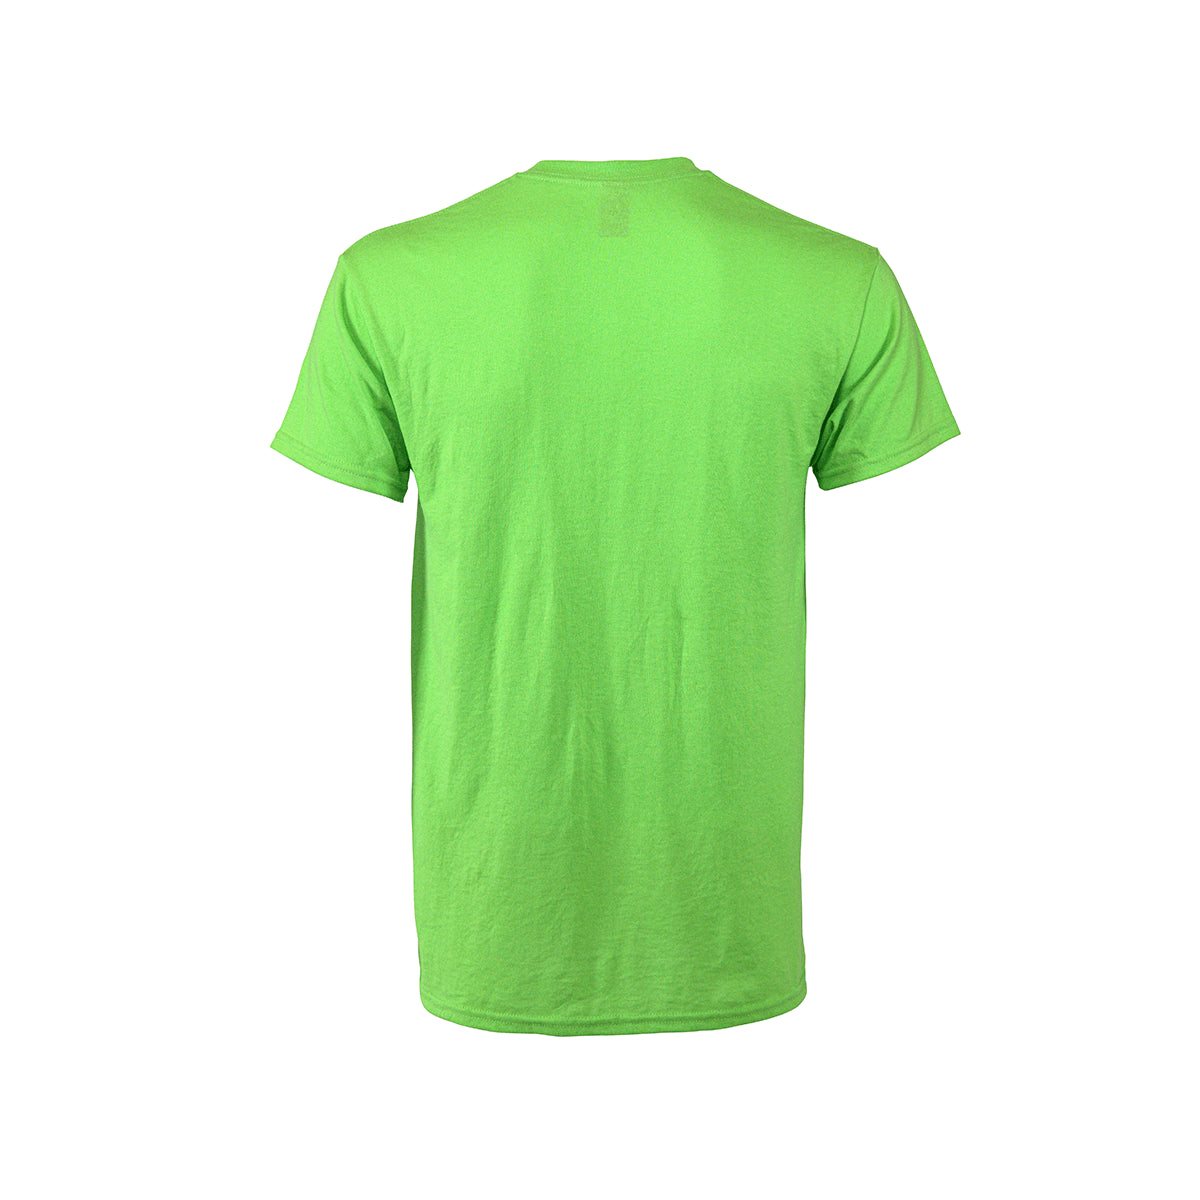 JOOLA Eat Sleep Dink T-Shirt (Men's) - Lime Green